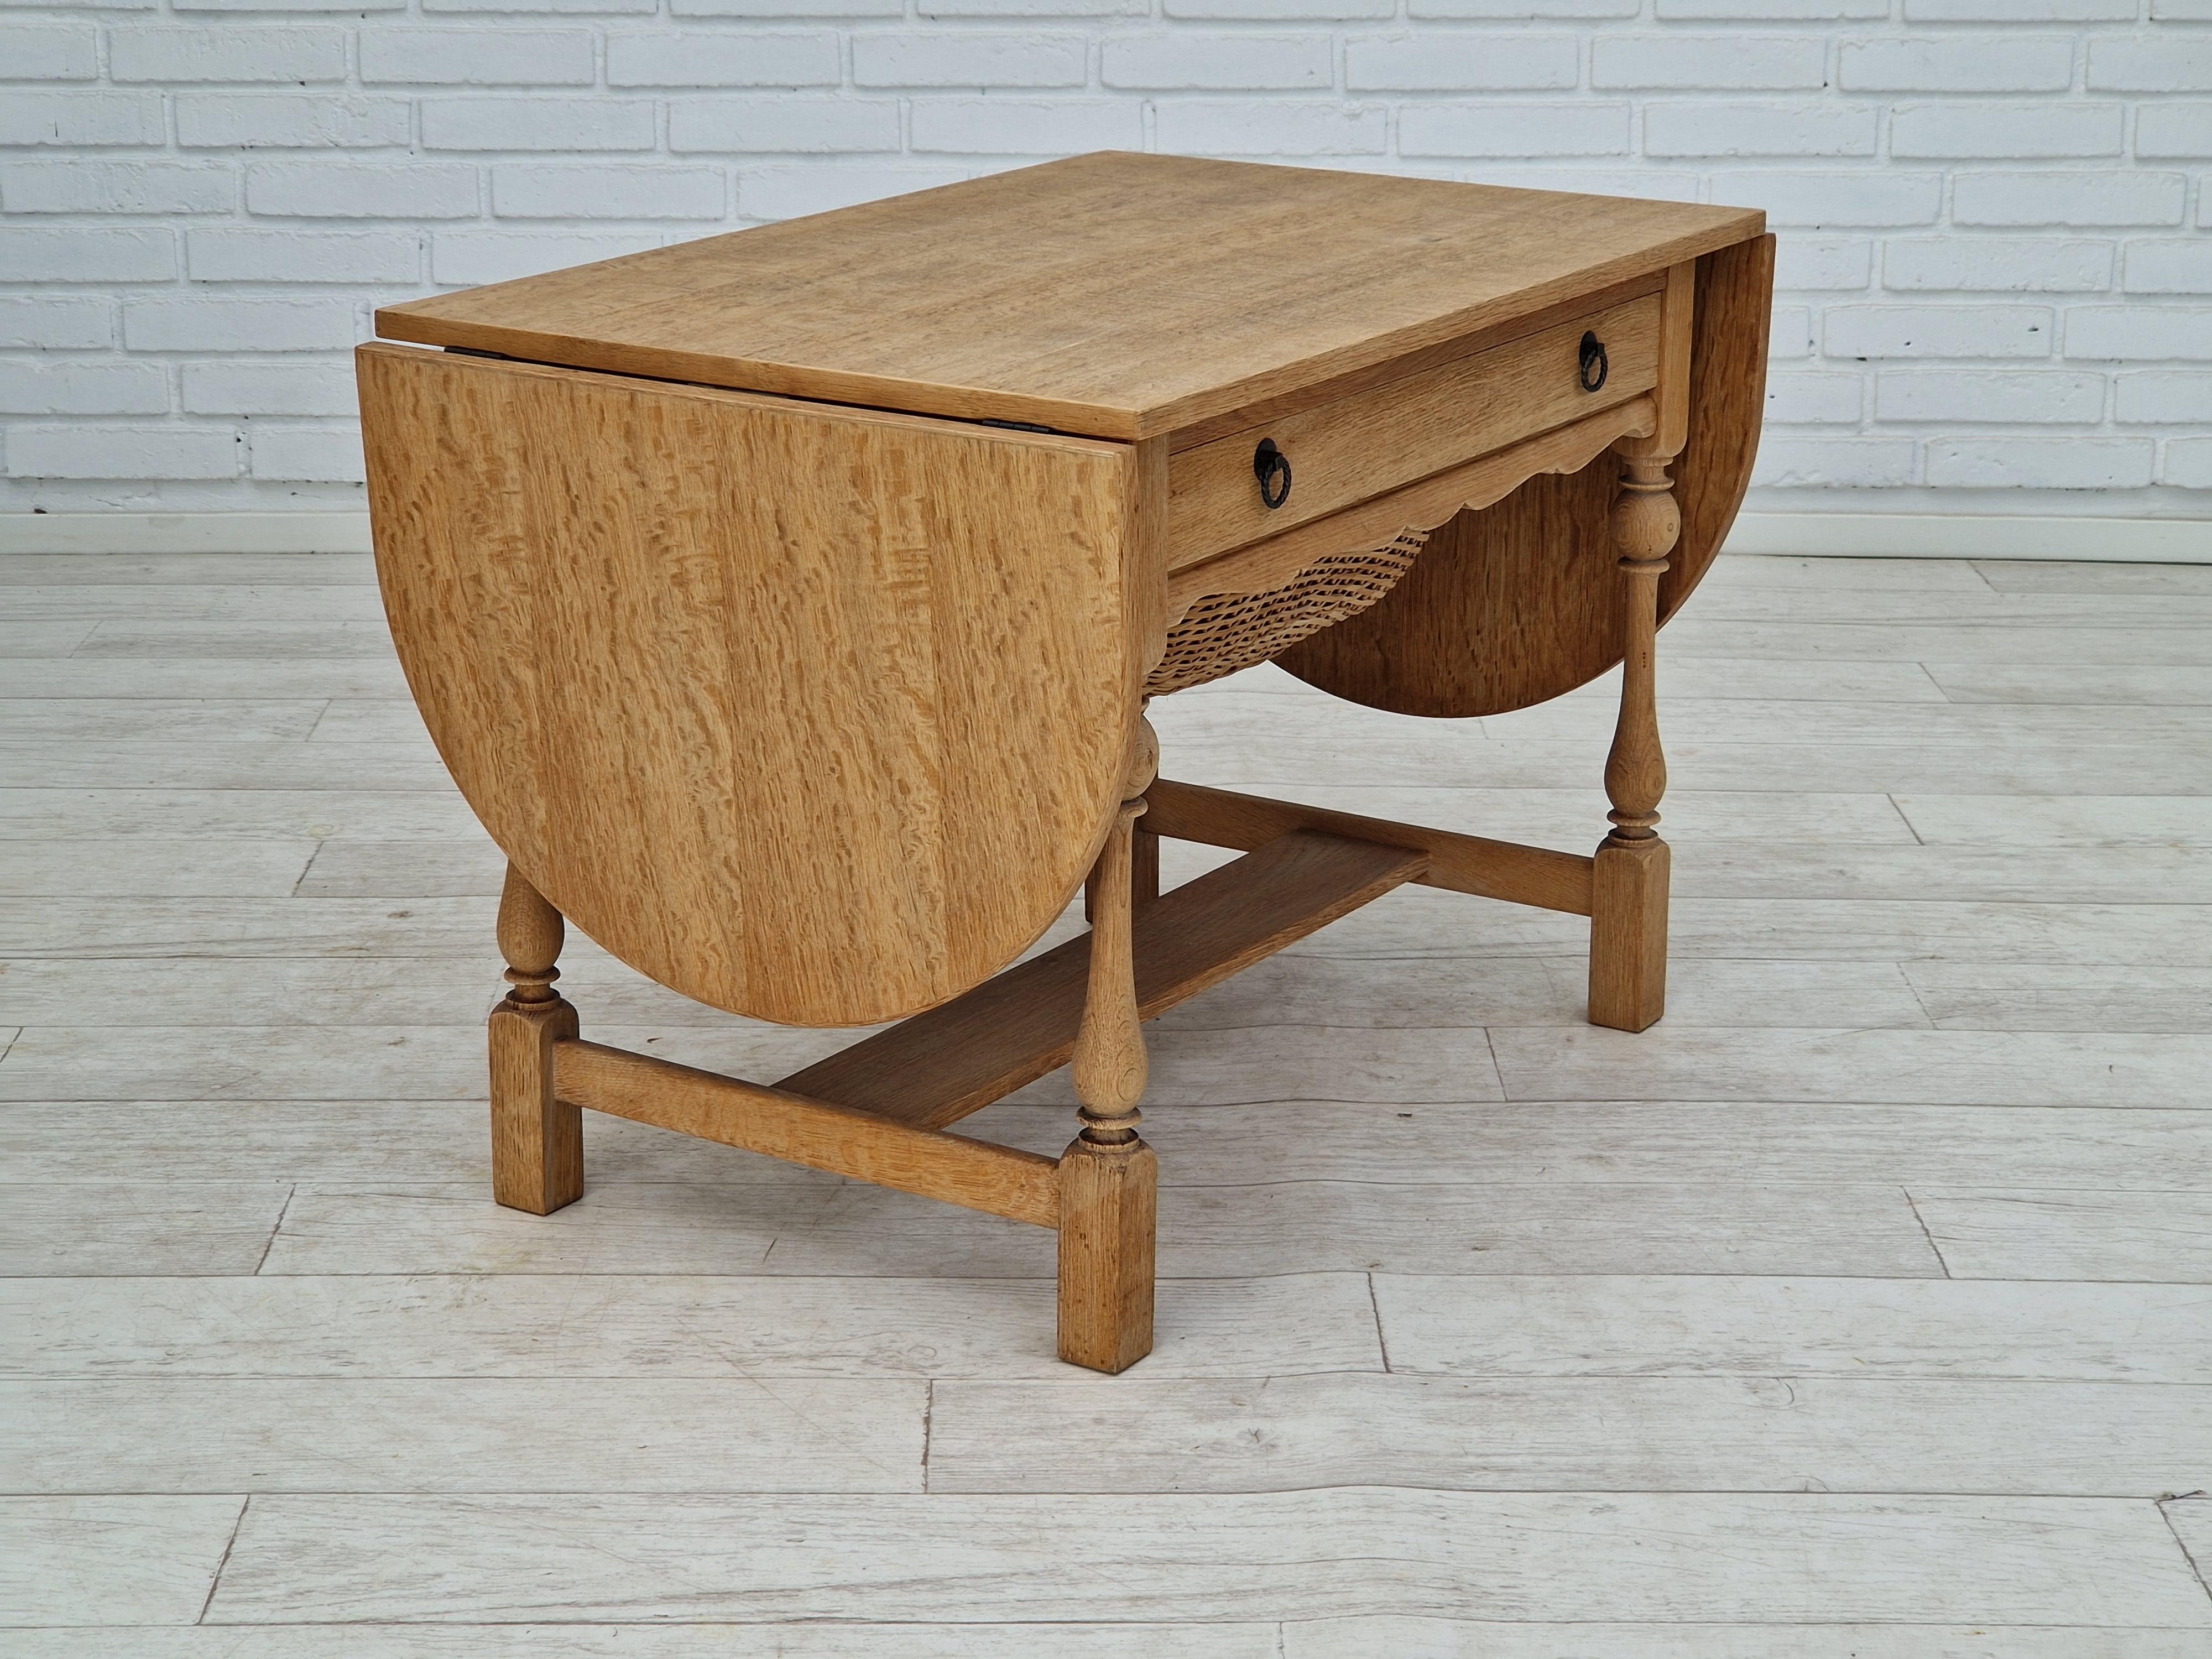 1970s, Danish Design, Coffee / Sewing Table, Oak Wood, Original Condition 2